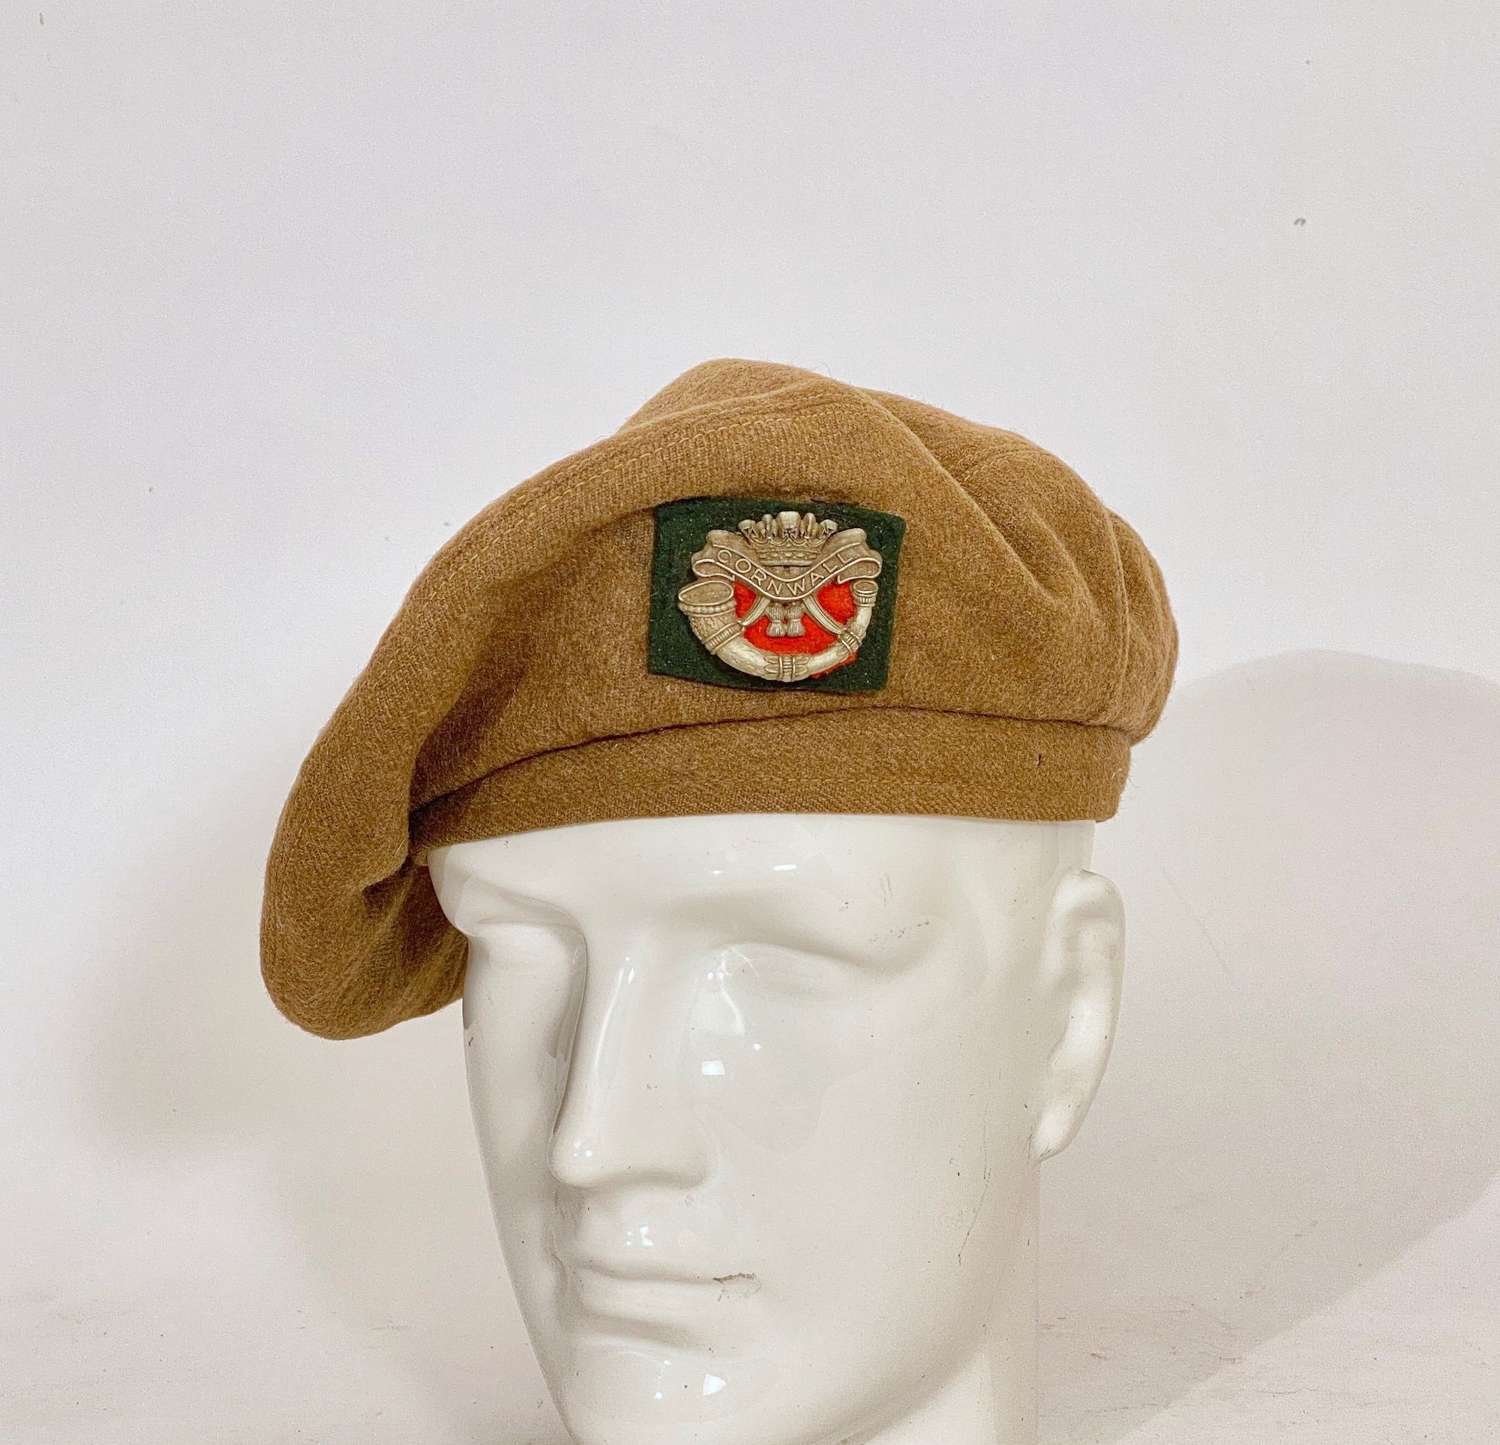 WW1 1945 DCLI General Service Cap with Plastic Economy Badge.